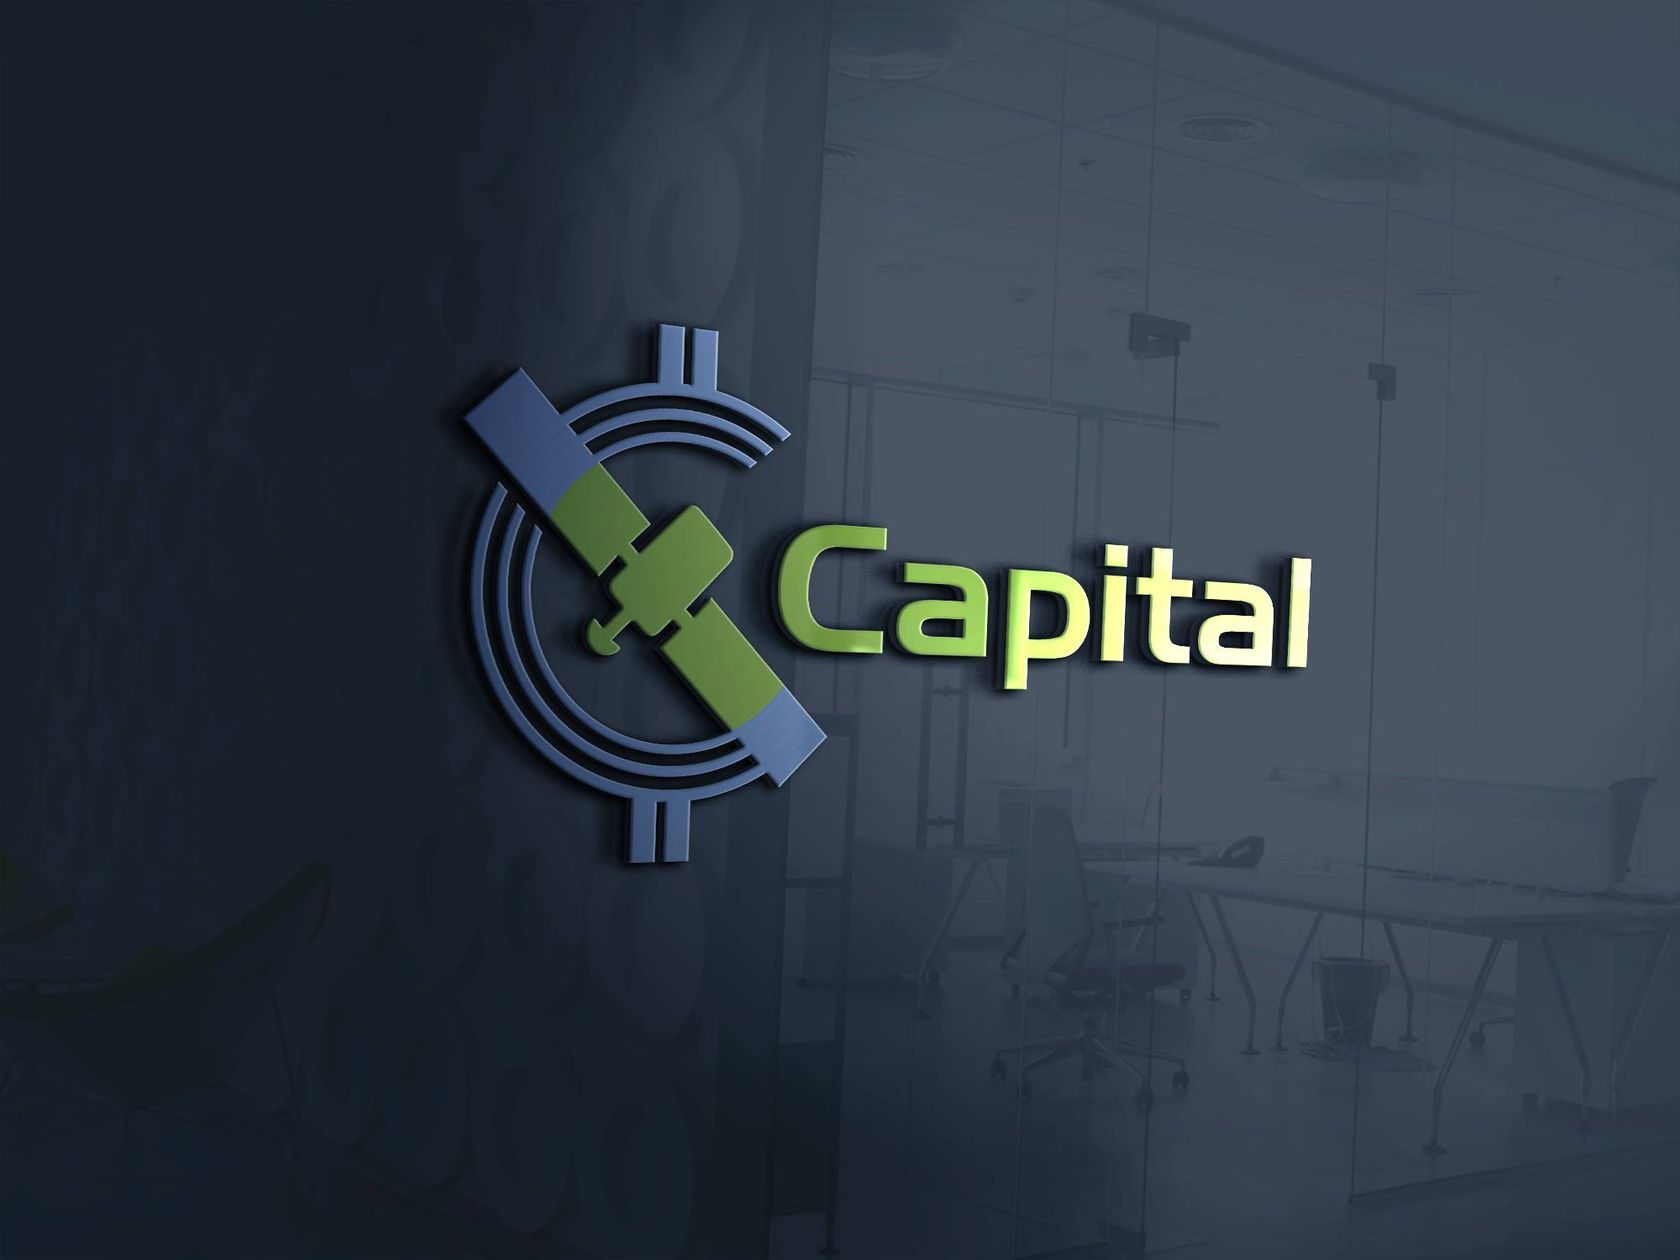 capital.jpg